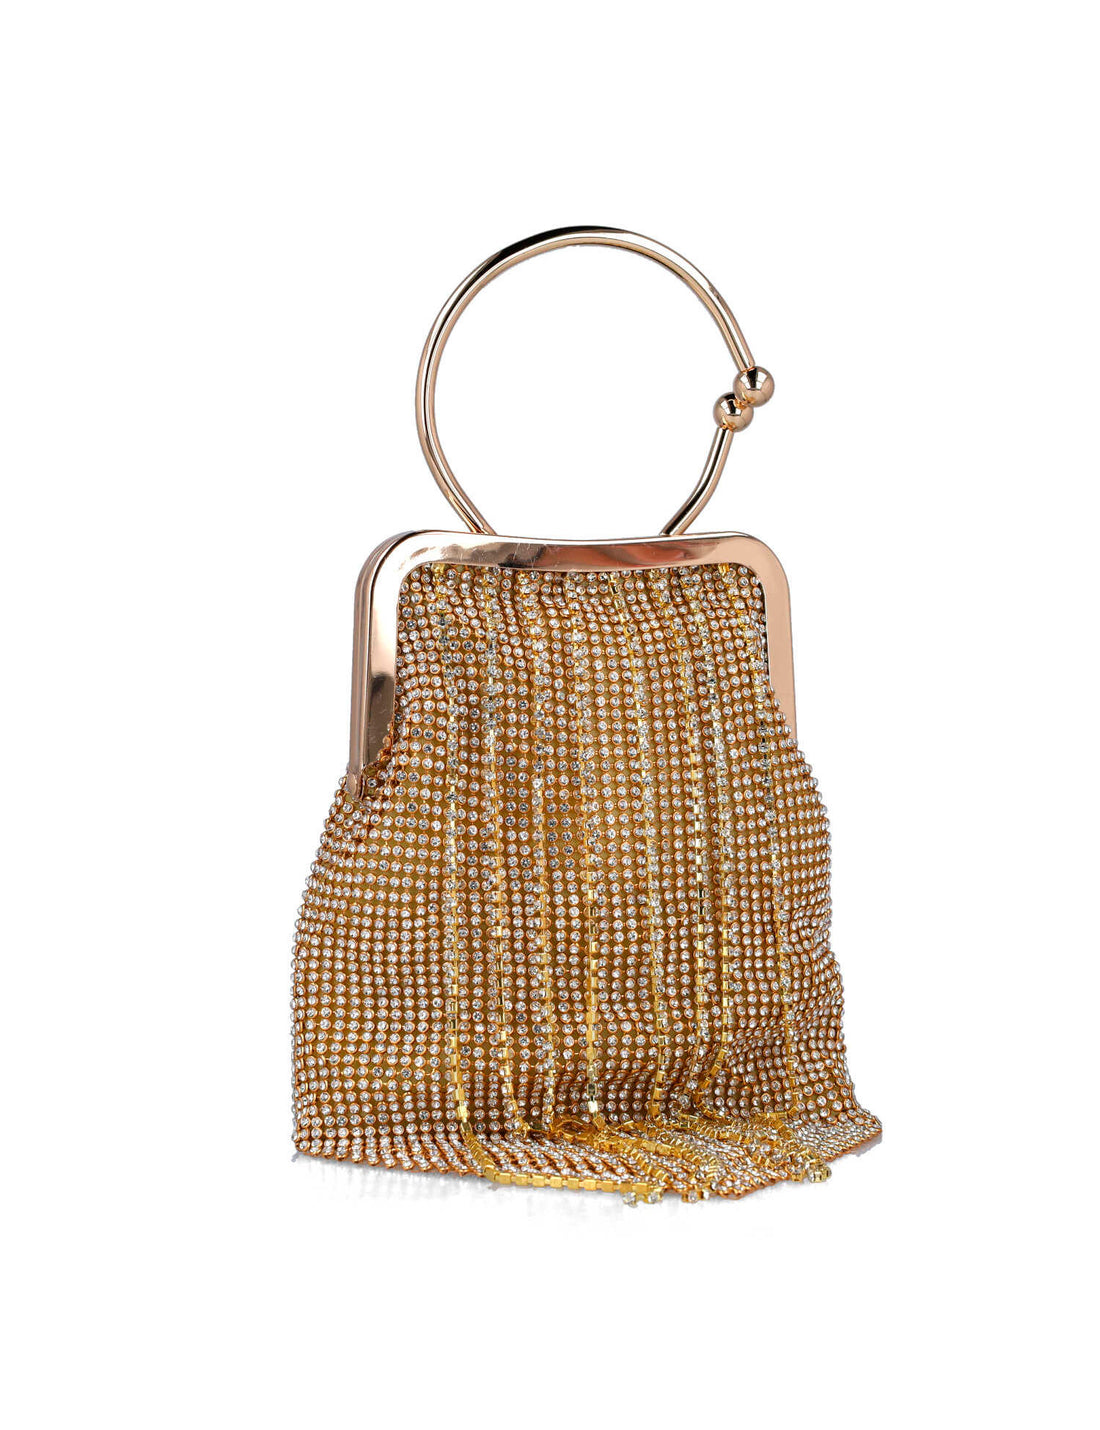 Embellished Handbag With Round Handles_85687_00_02